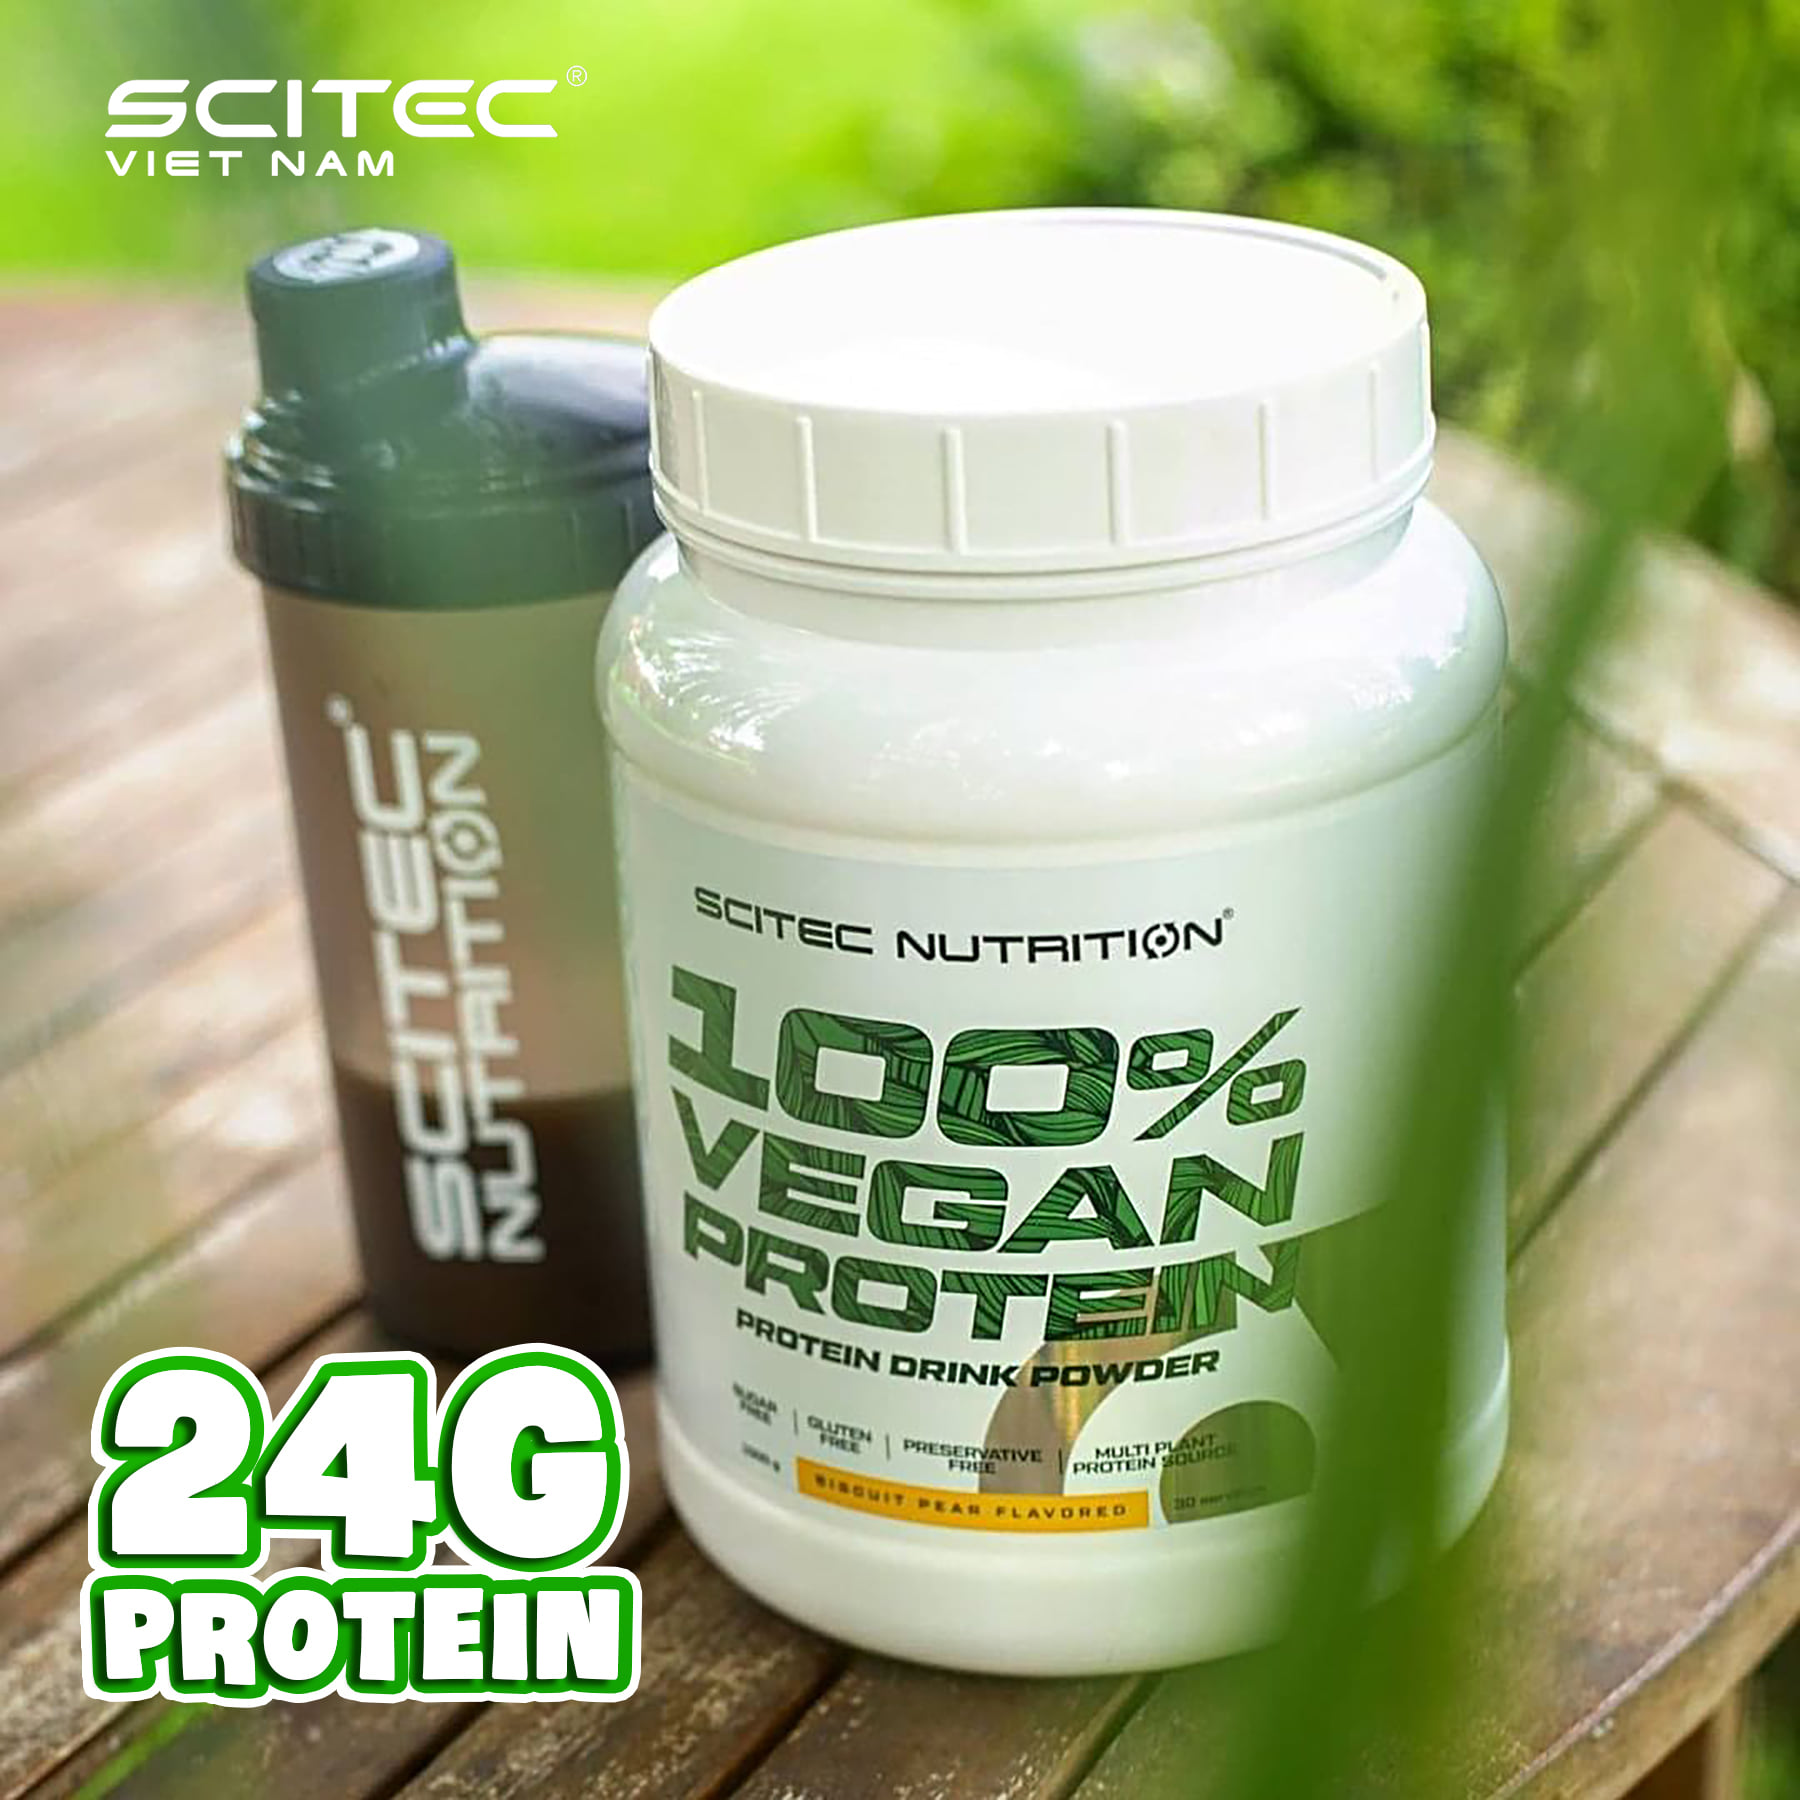  Bổ sung protein chay, tăng cơ nạc | 100% Vegan Protein hộp 1000g - 30 serving | Scitec Nutrition